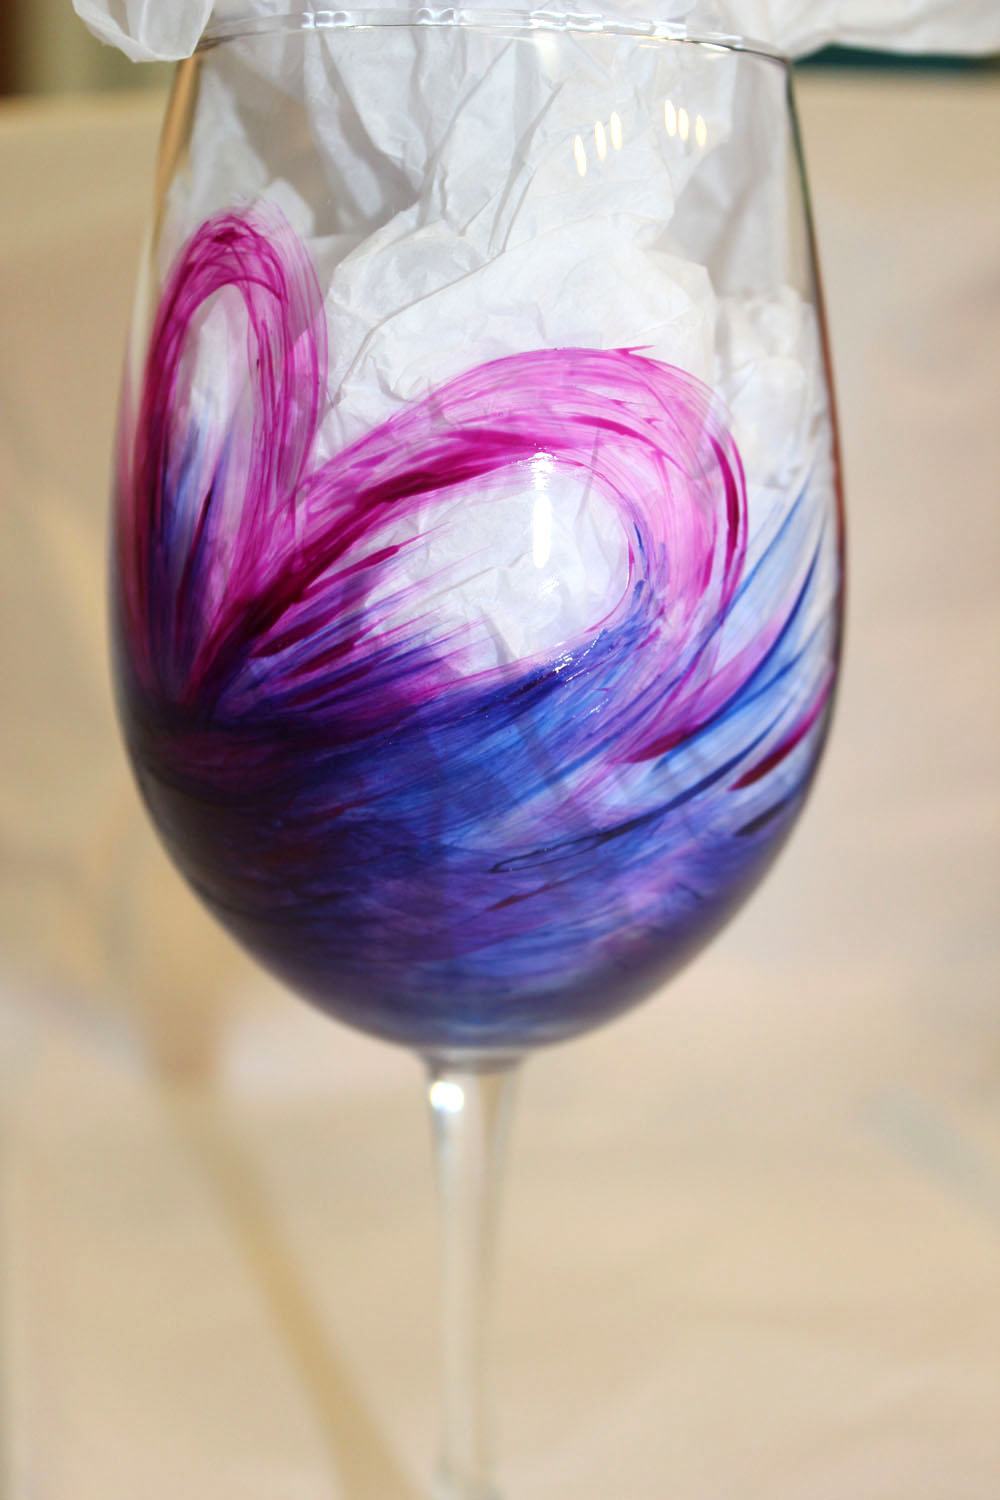 purple-designs-hand-painted-wine-glass-art-by-tjm-studio-img_4692.jpg